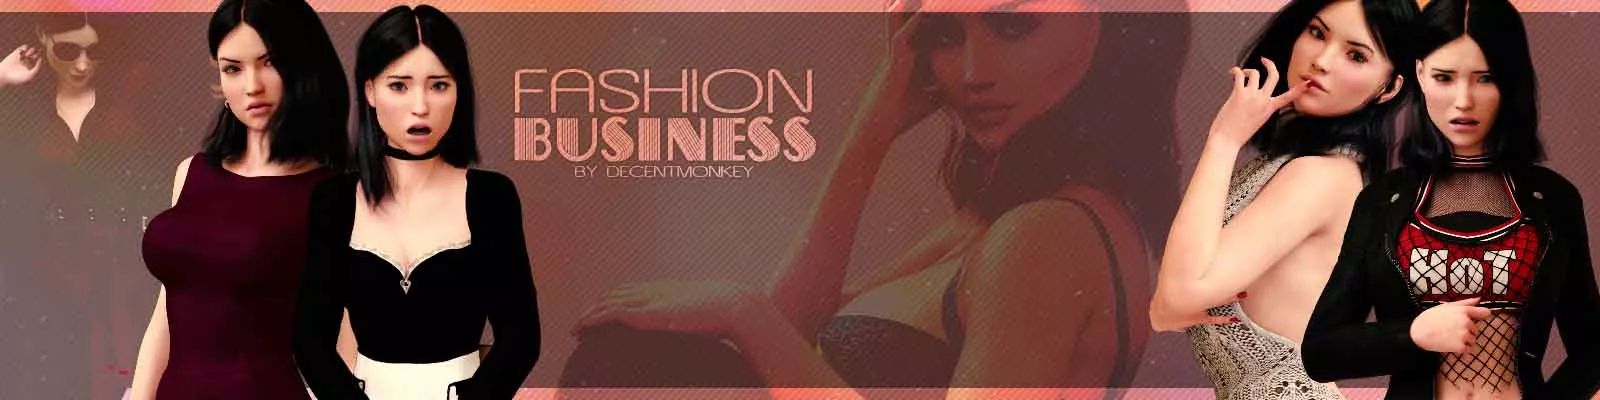 Fashion Business – Episode 3 – Version 8